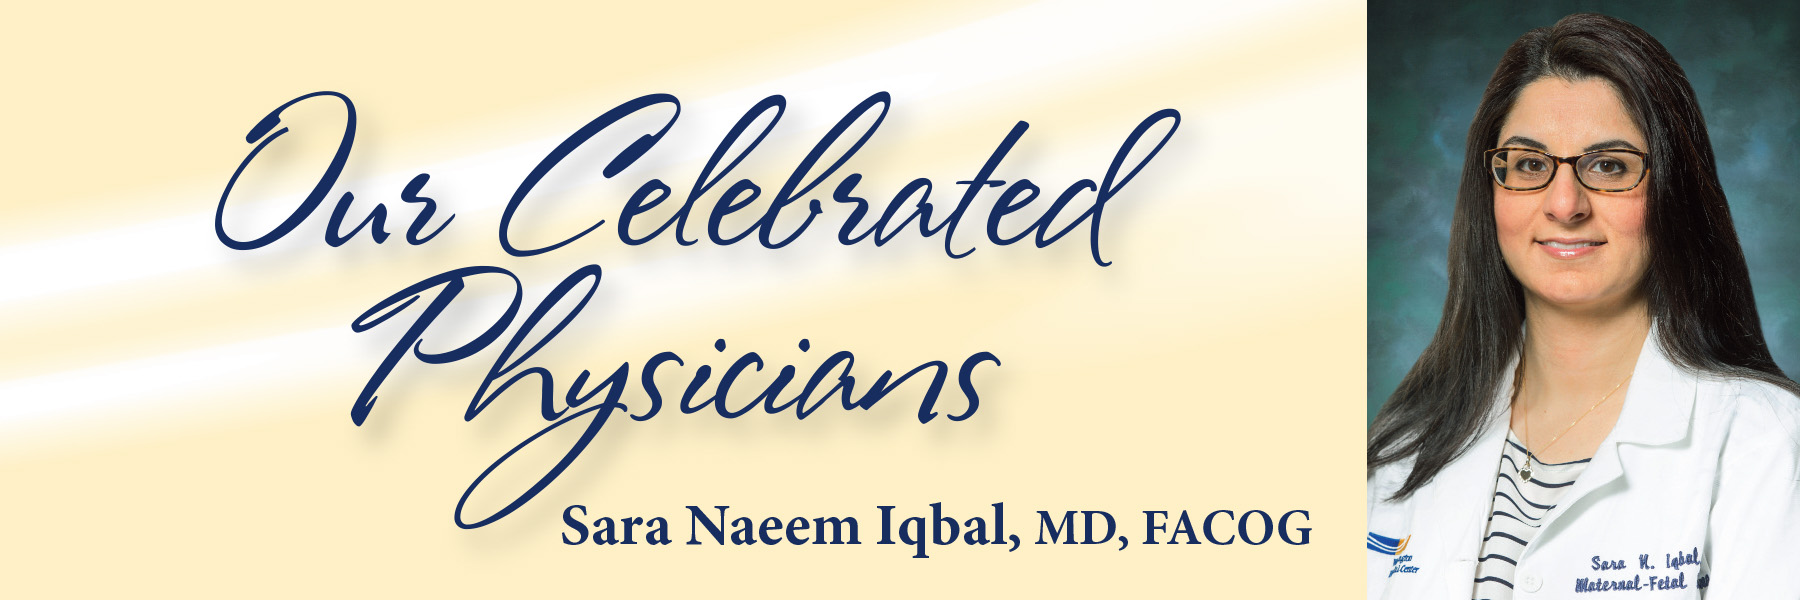 Celebrated-Physician-BLOG_Iqbal-Sara